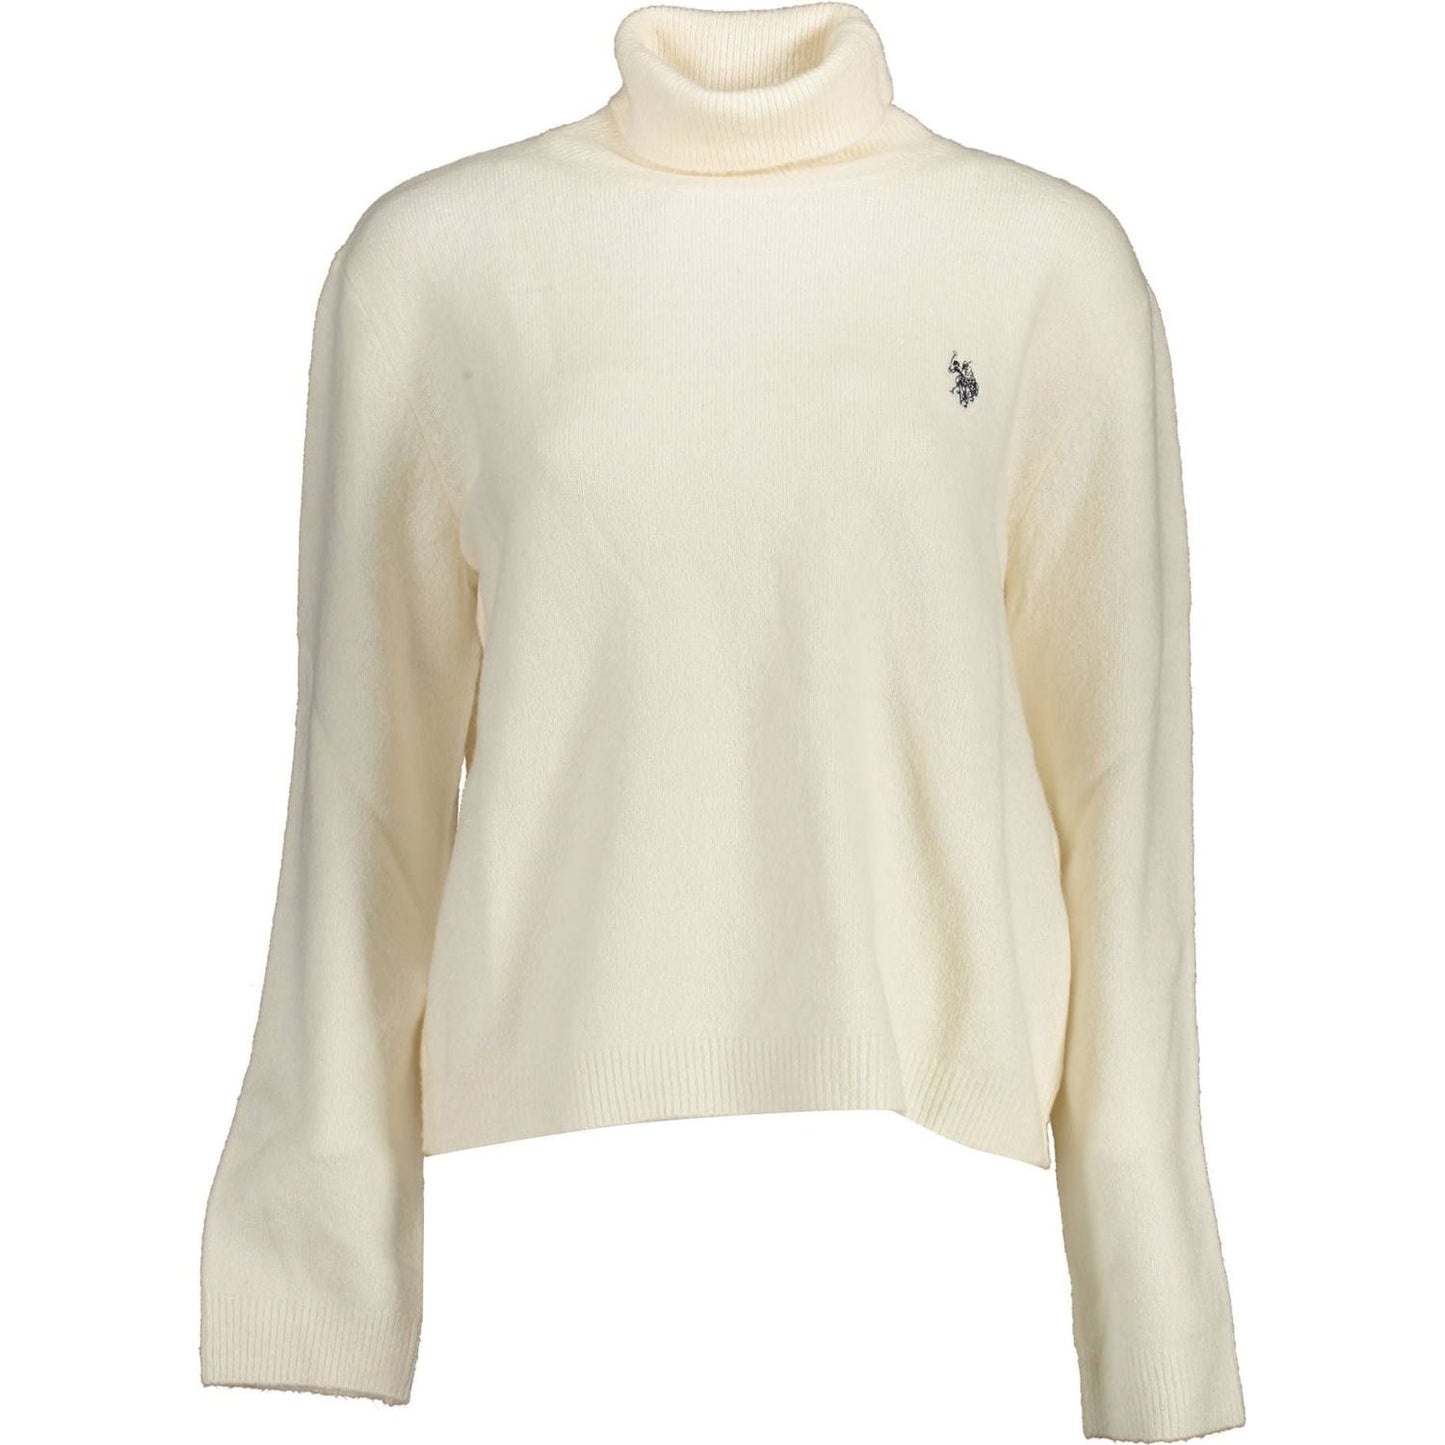 U.S. POLO ASSN.Elegant Turtleneck Sweater with Embroidered LogoMcRichard Designer Brands£109.00